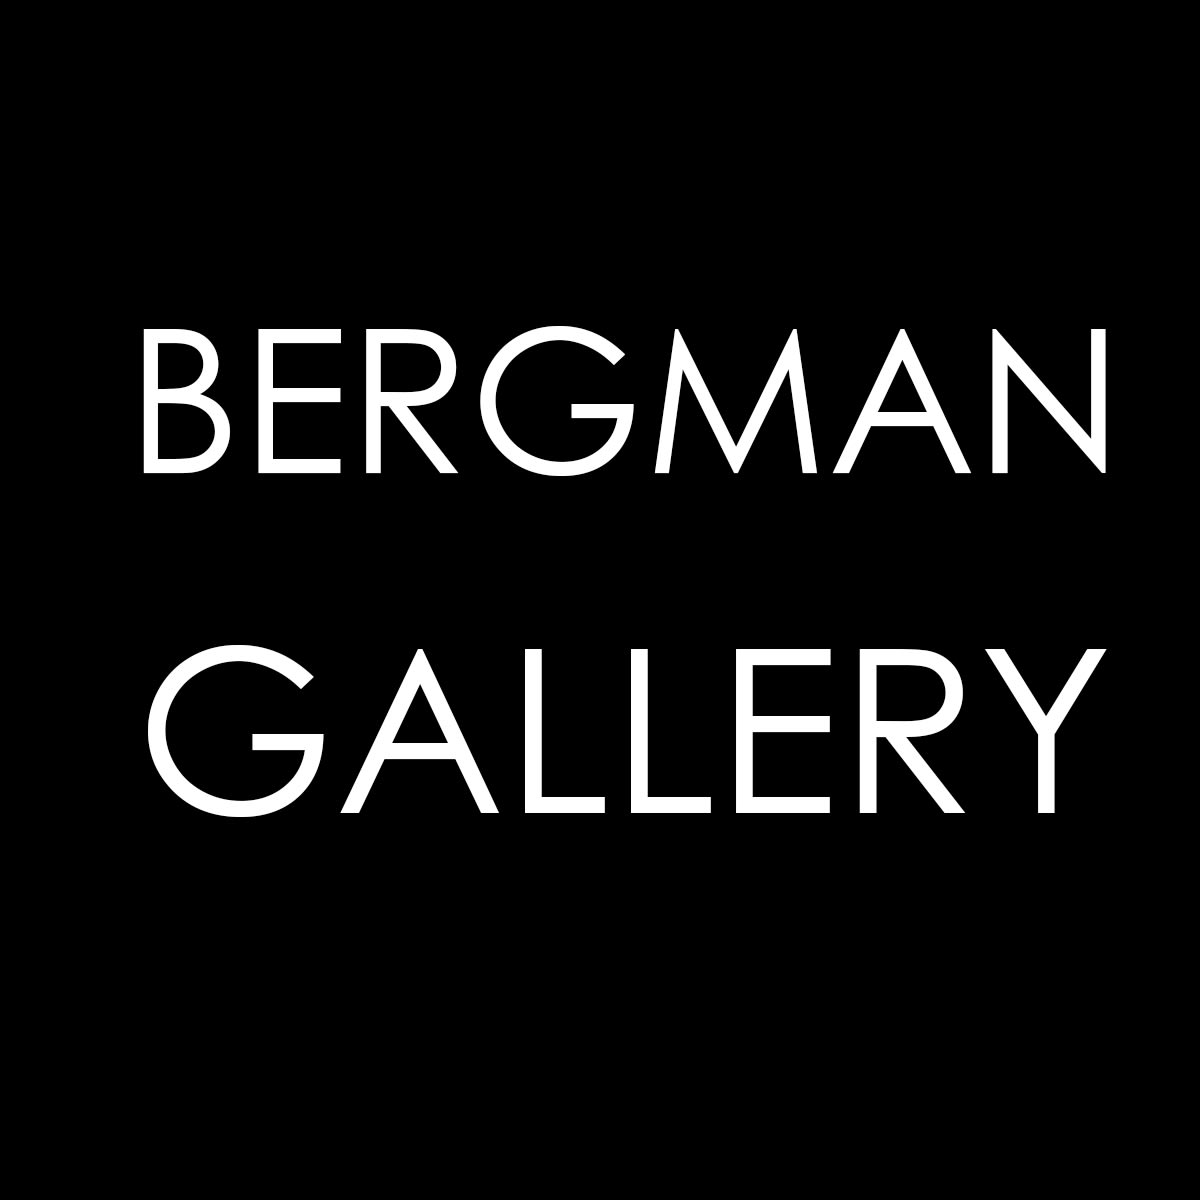 Bergman Gallery company logo